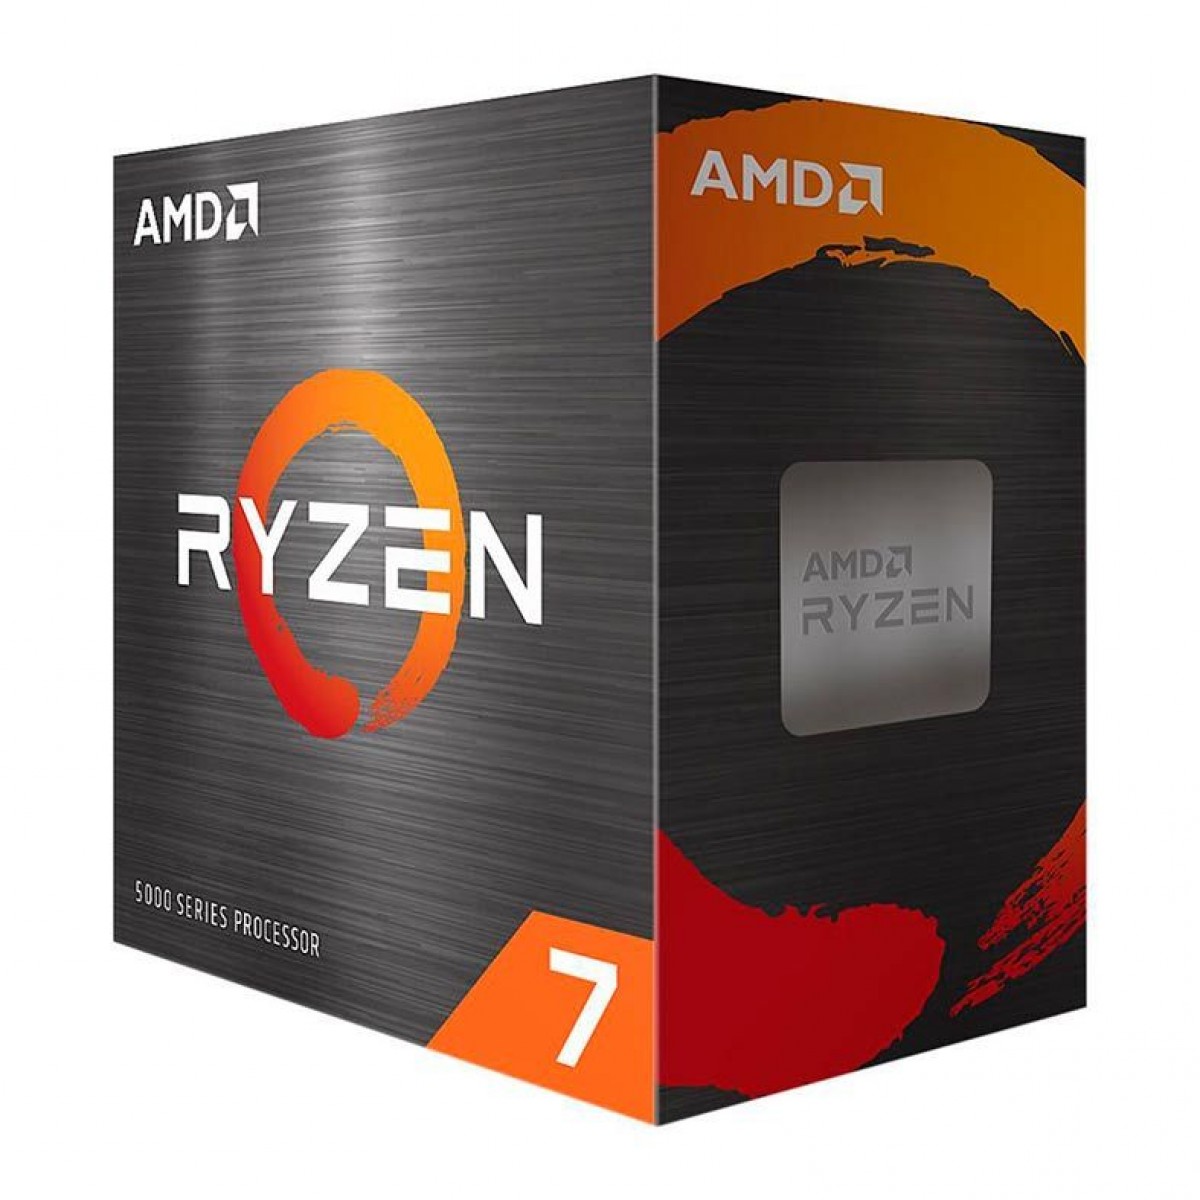  Kit Upgrade, ASUS TUF Gaming X570-Plus + AMD Ryzen 7 5700G + Memória DDR4, 16GB 3000MHz